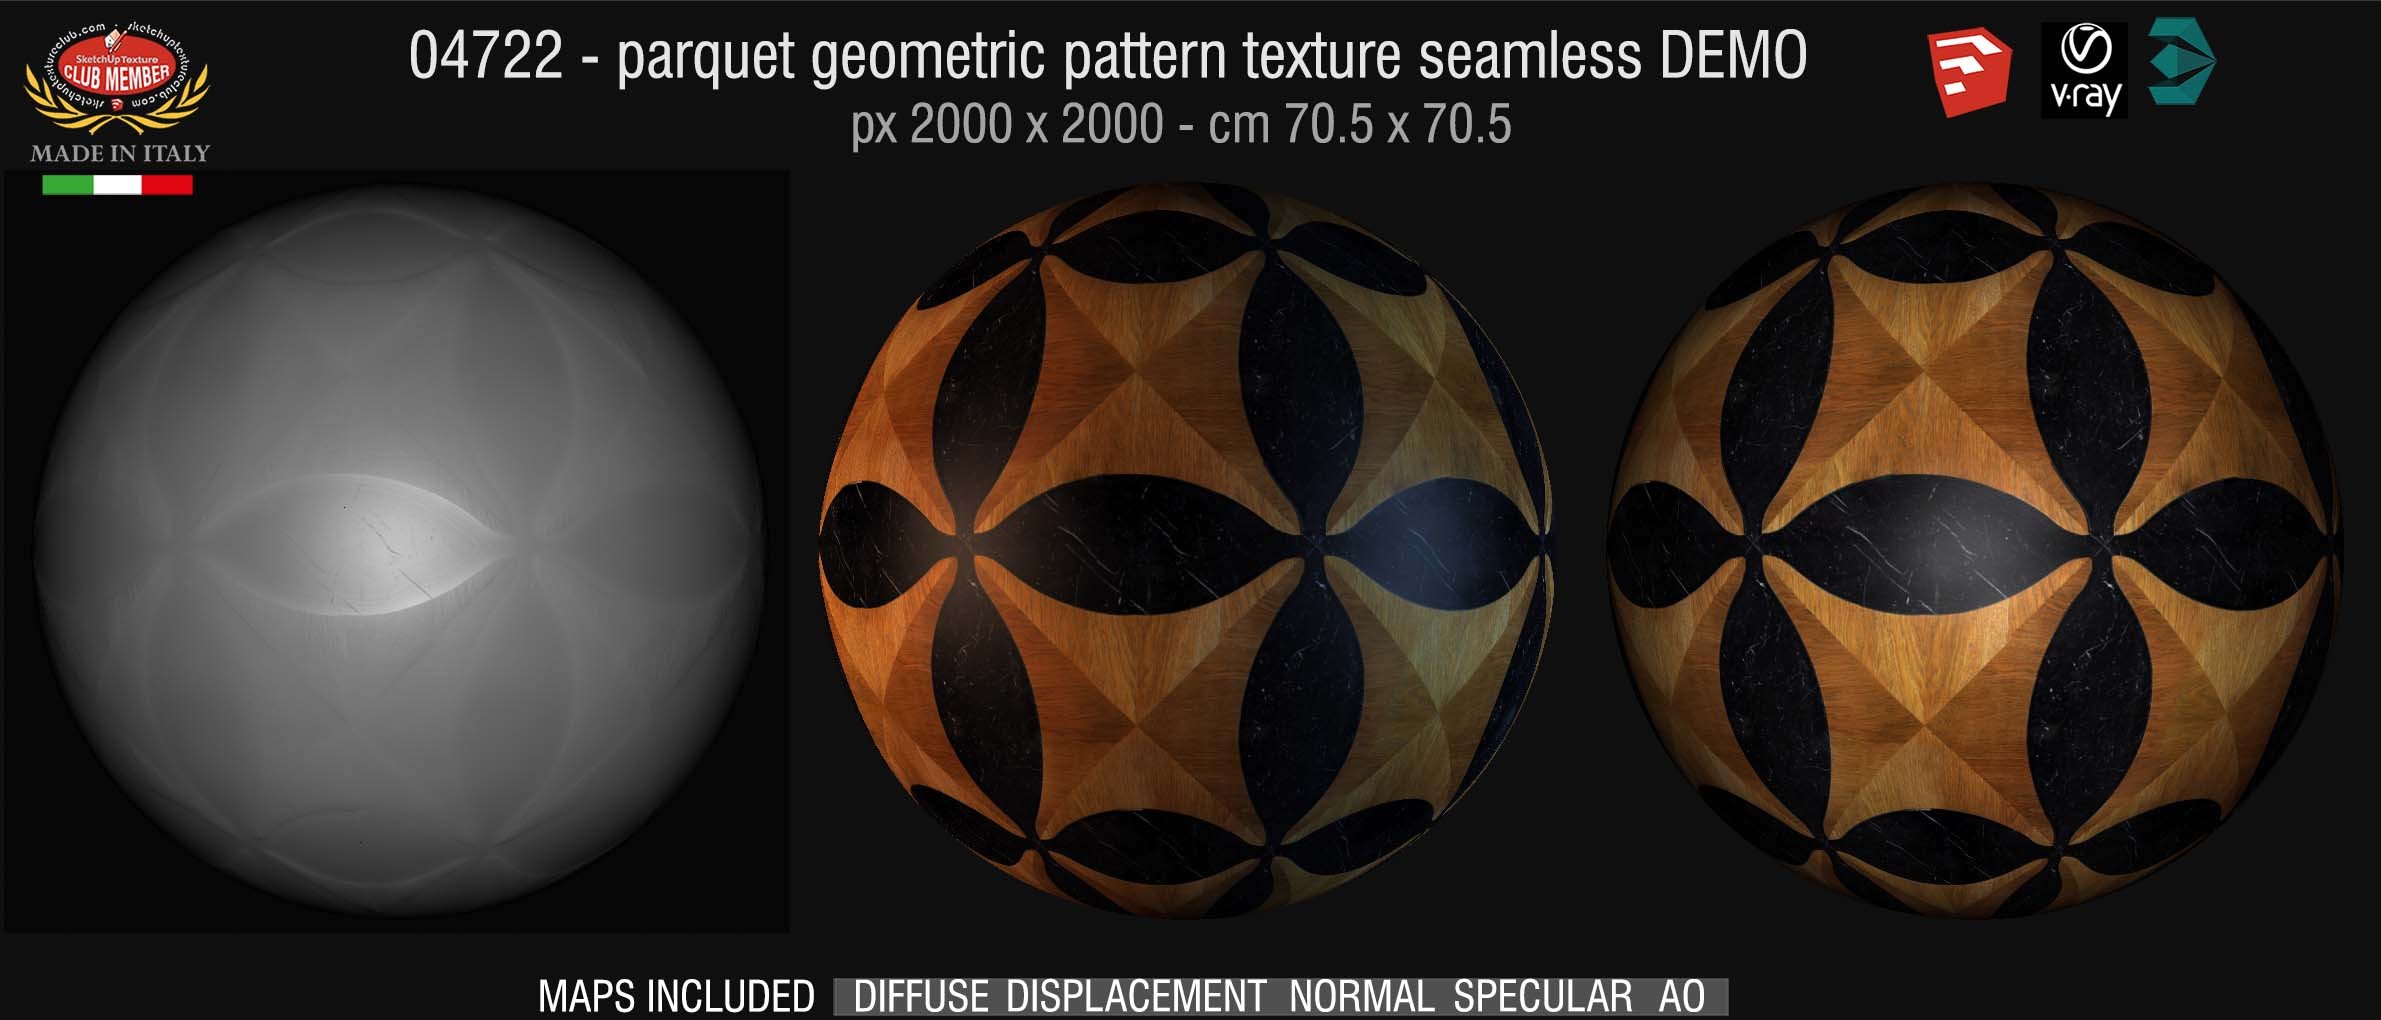 04722 HR Parquet geometric pattern texture seamless + maps DEMO